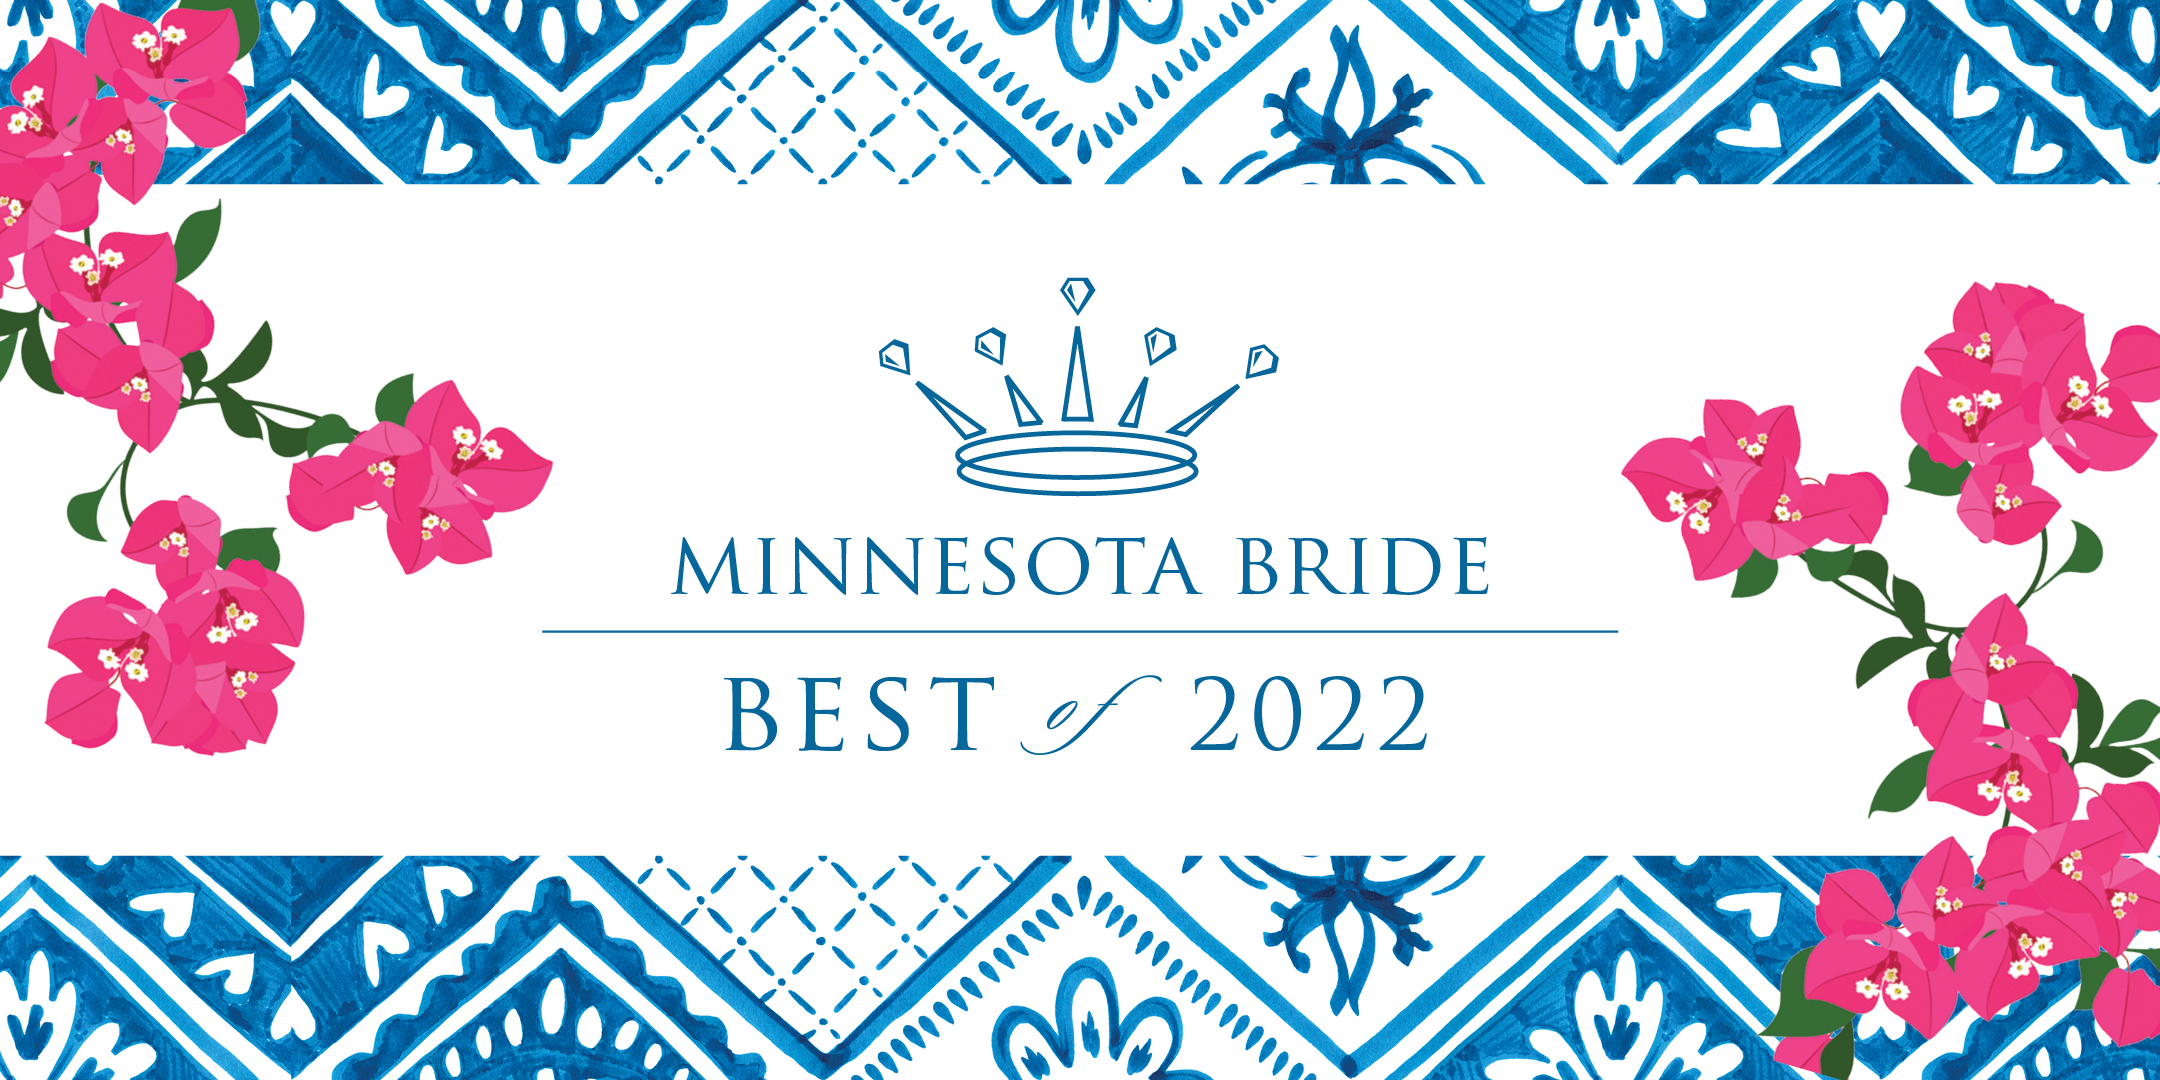 Minnesota Bride's Best of 2022